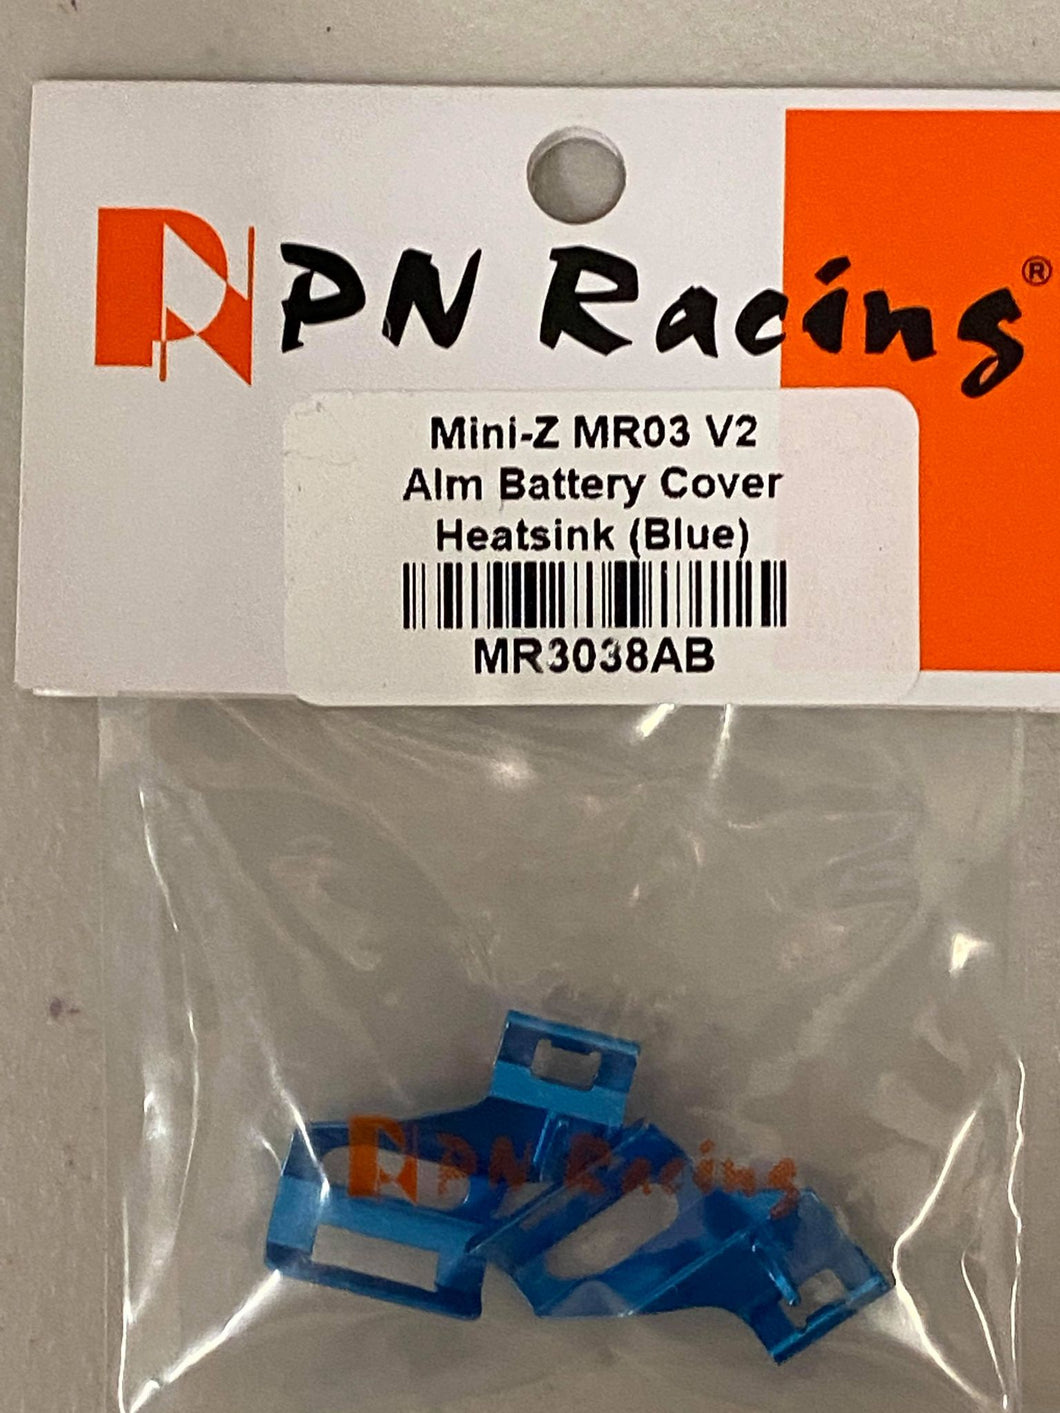 MR3038AB PN Racing Mini-Z MR03 V2 Alm Battery Cover Heatsink (Blue)